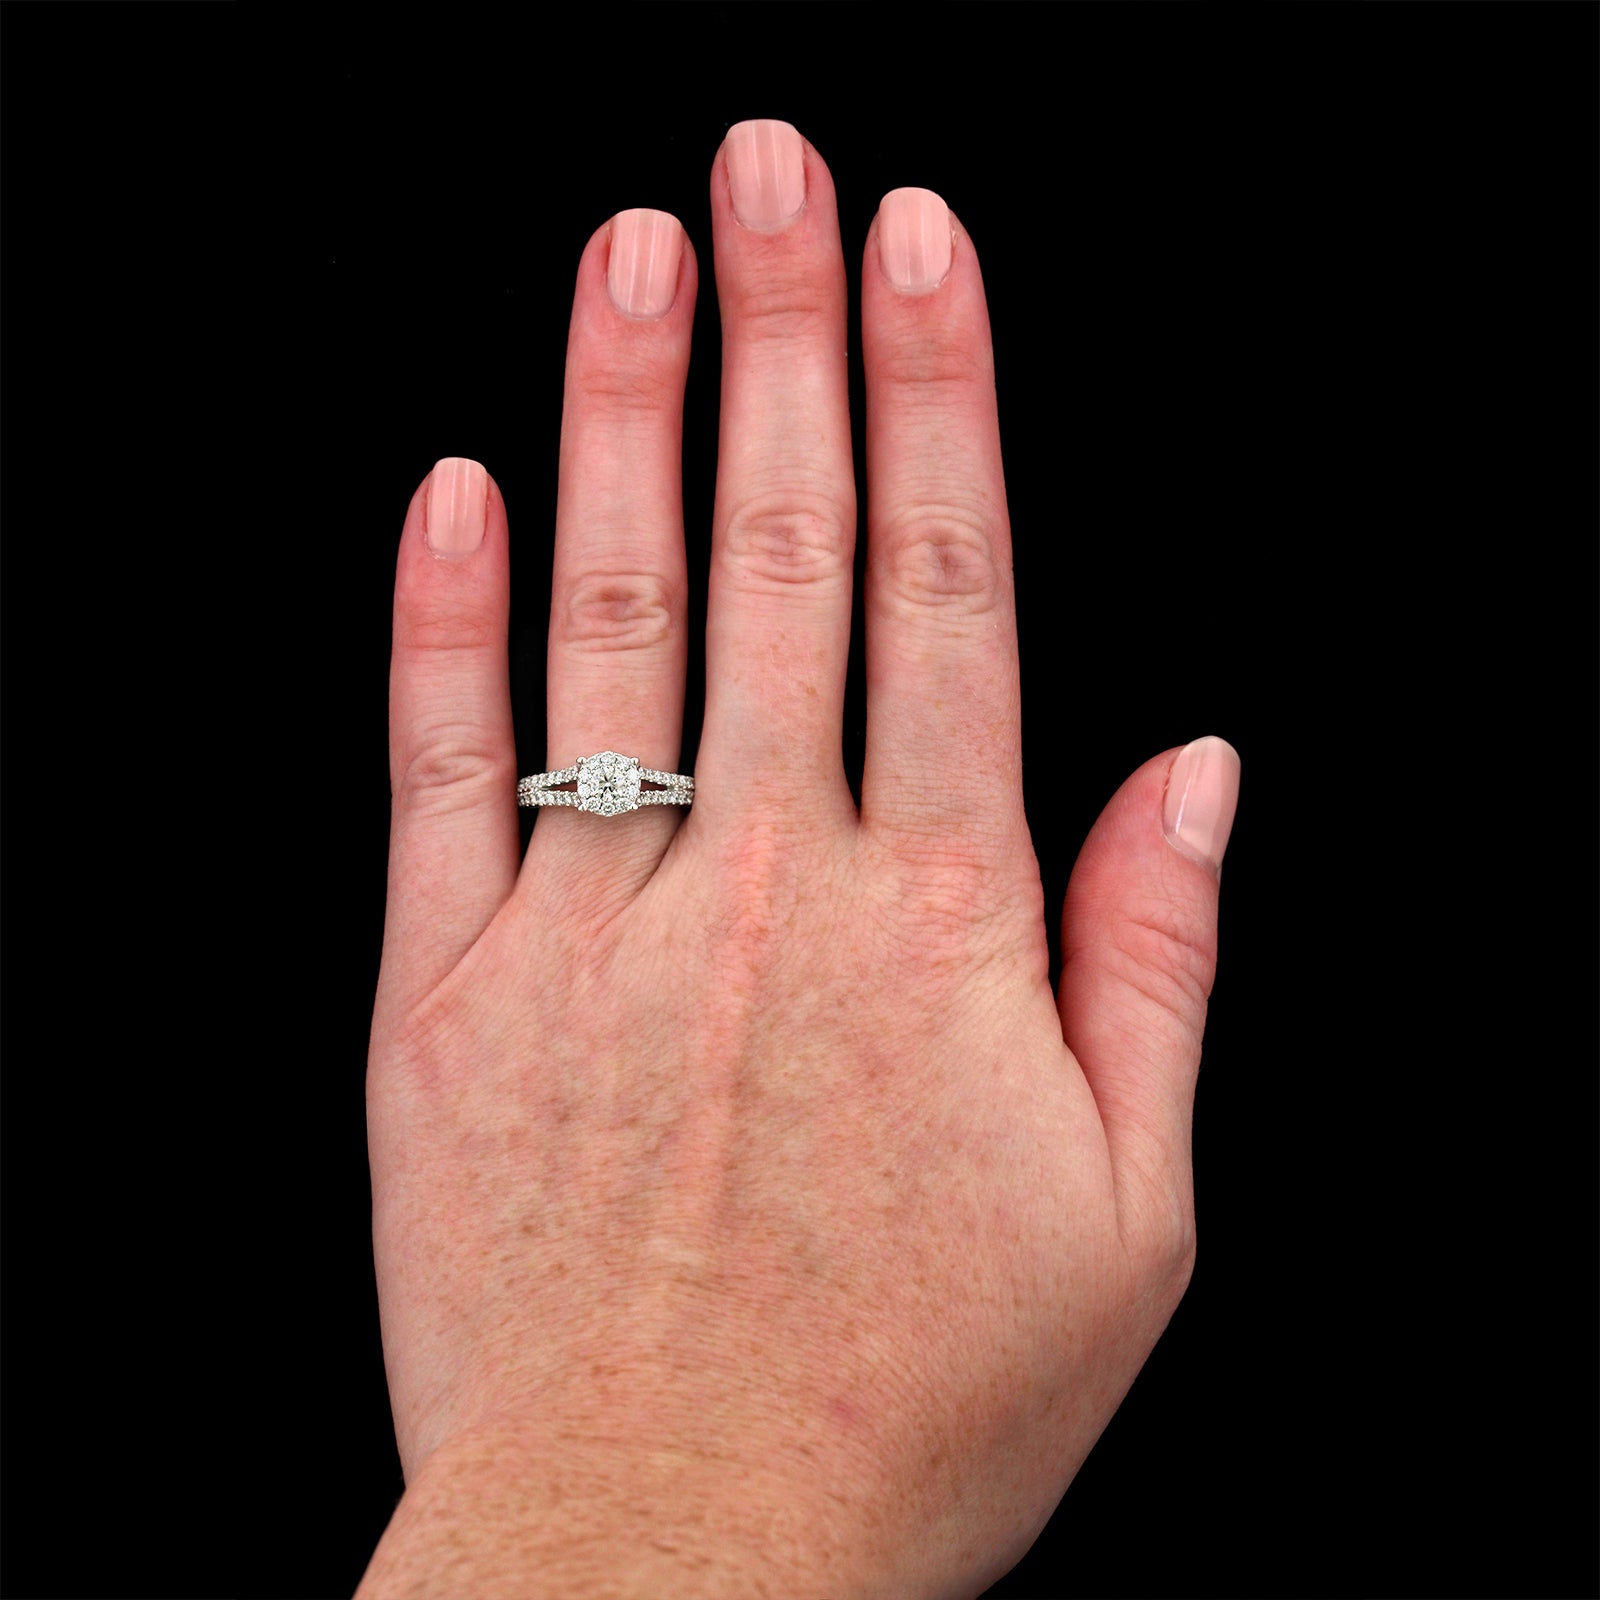 14K White Gold Estate Diamond Halo Engagement Ring